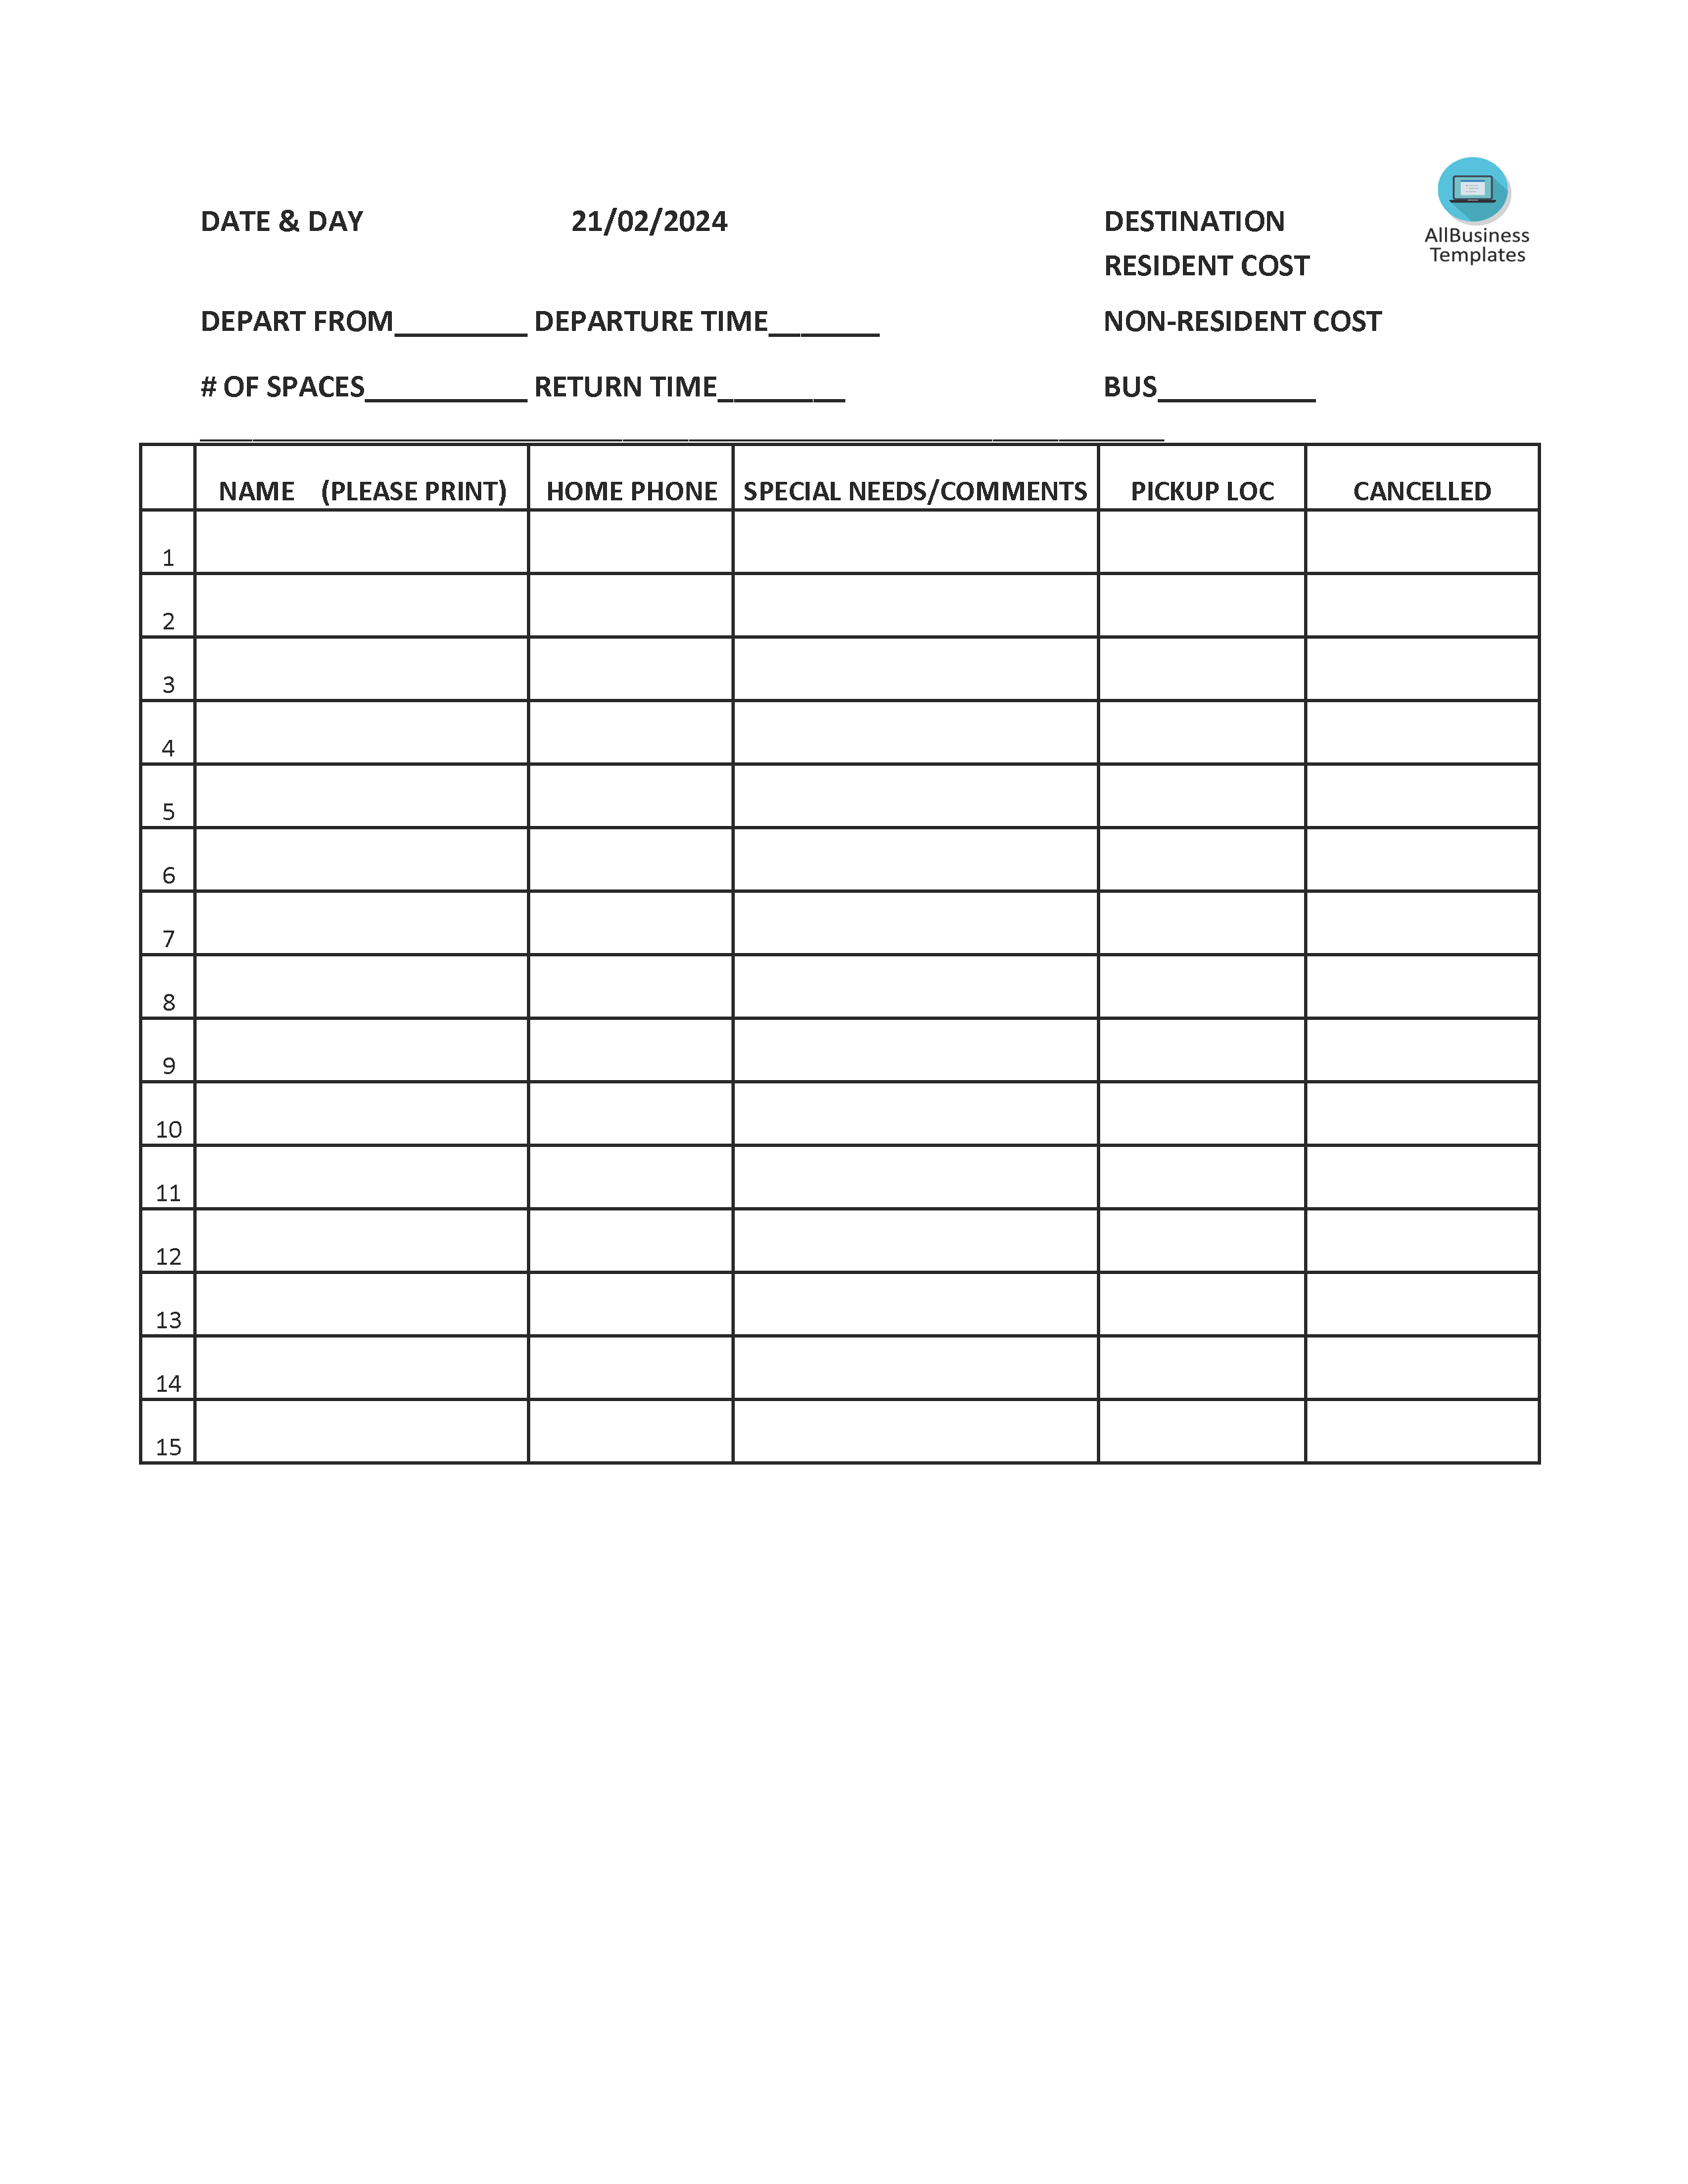 Sign-up Sheet worksheet main image